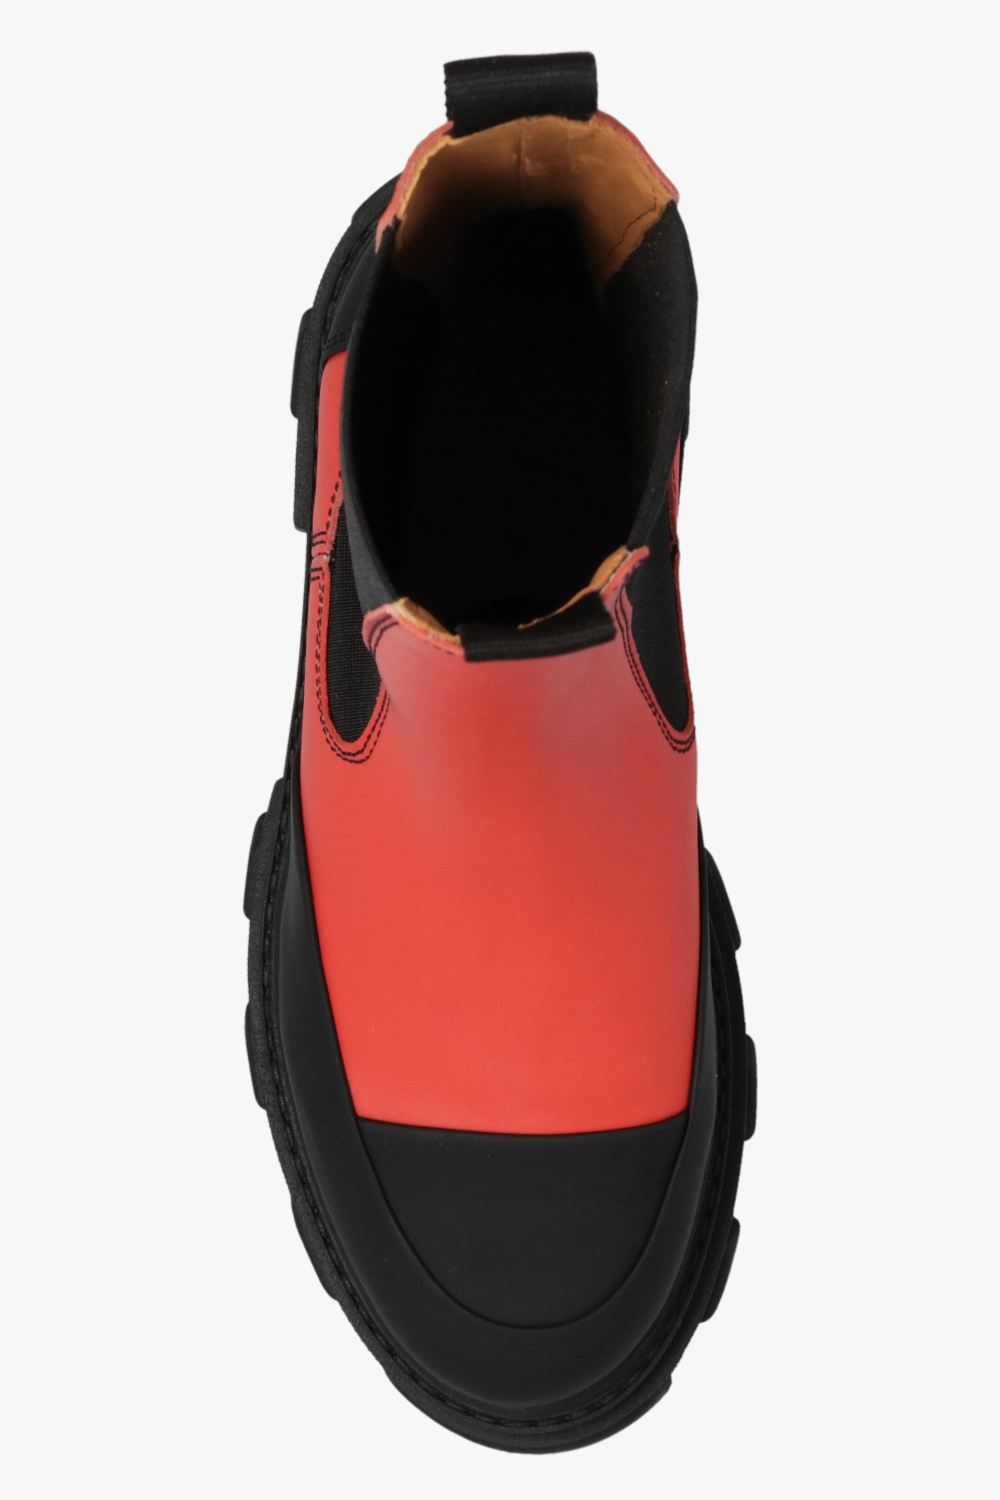 Ganni Nike Renew Run womens trainers shoes CK636 11 uk 8.5 eu 43 us 11 NEW BOX